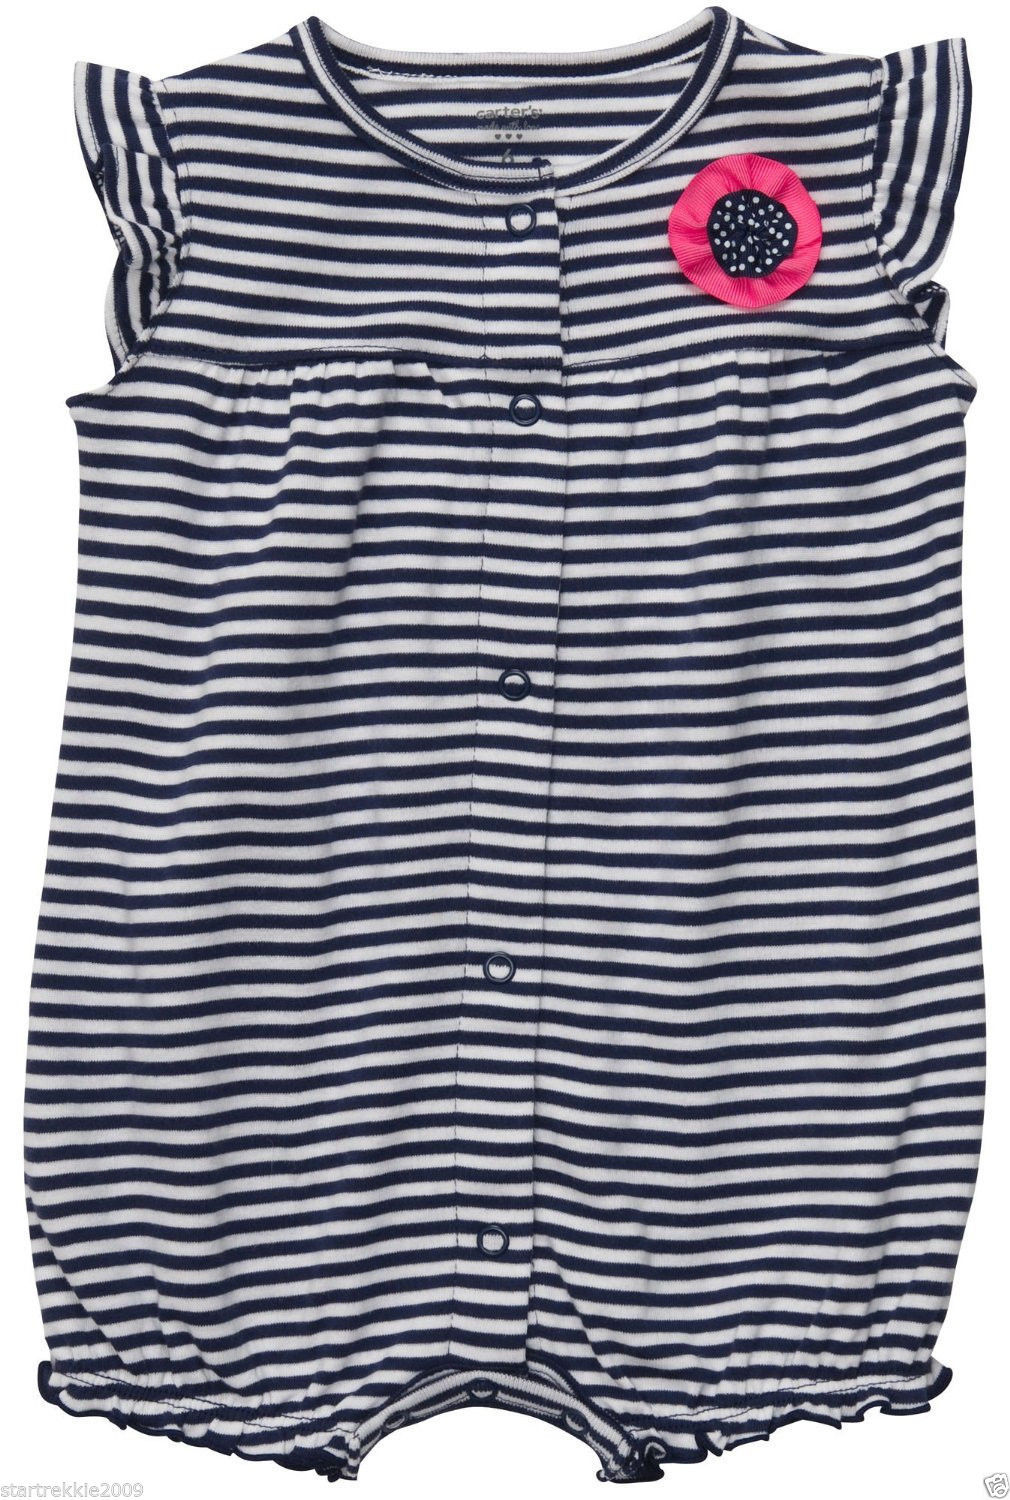 Carters Baby Girl Navy/White Stripe Print Creeper w/ Pink Rosette, Sz.9 Mos. NWT - $10.88